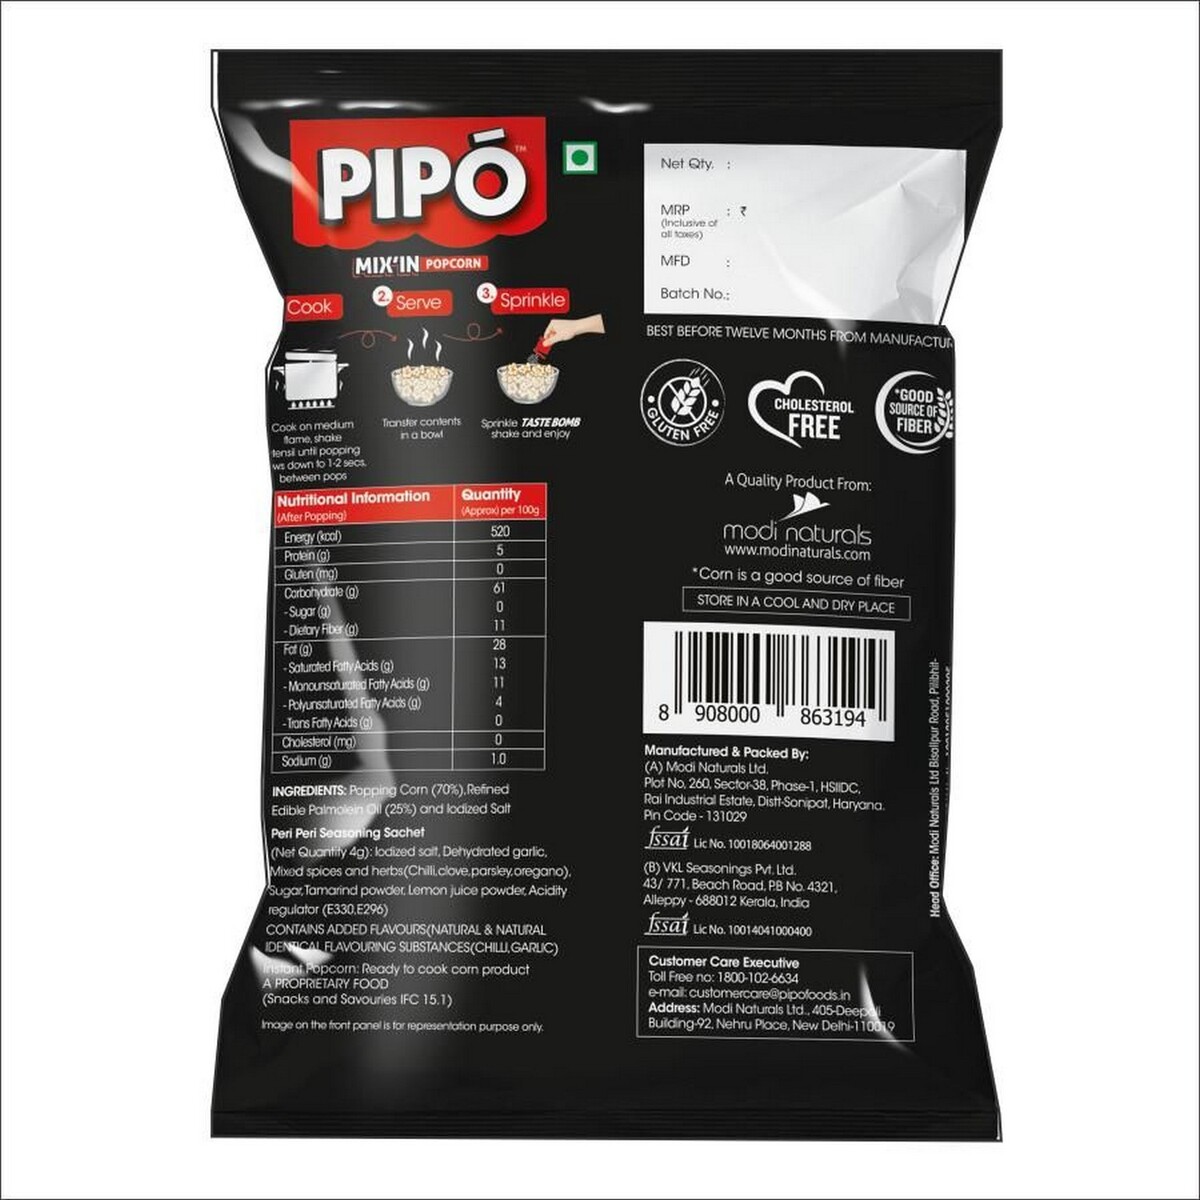 Pipo Mix in Peri Peri 60gm